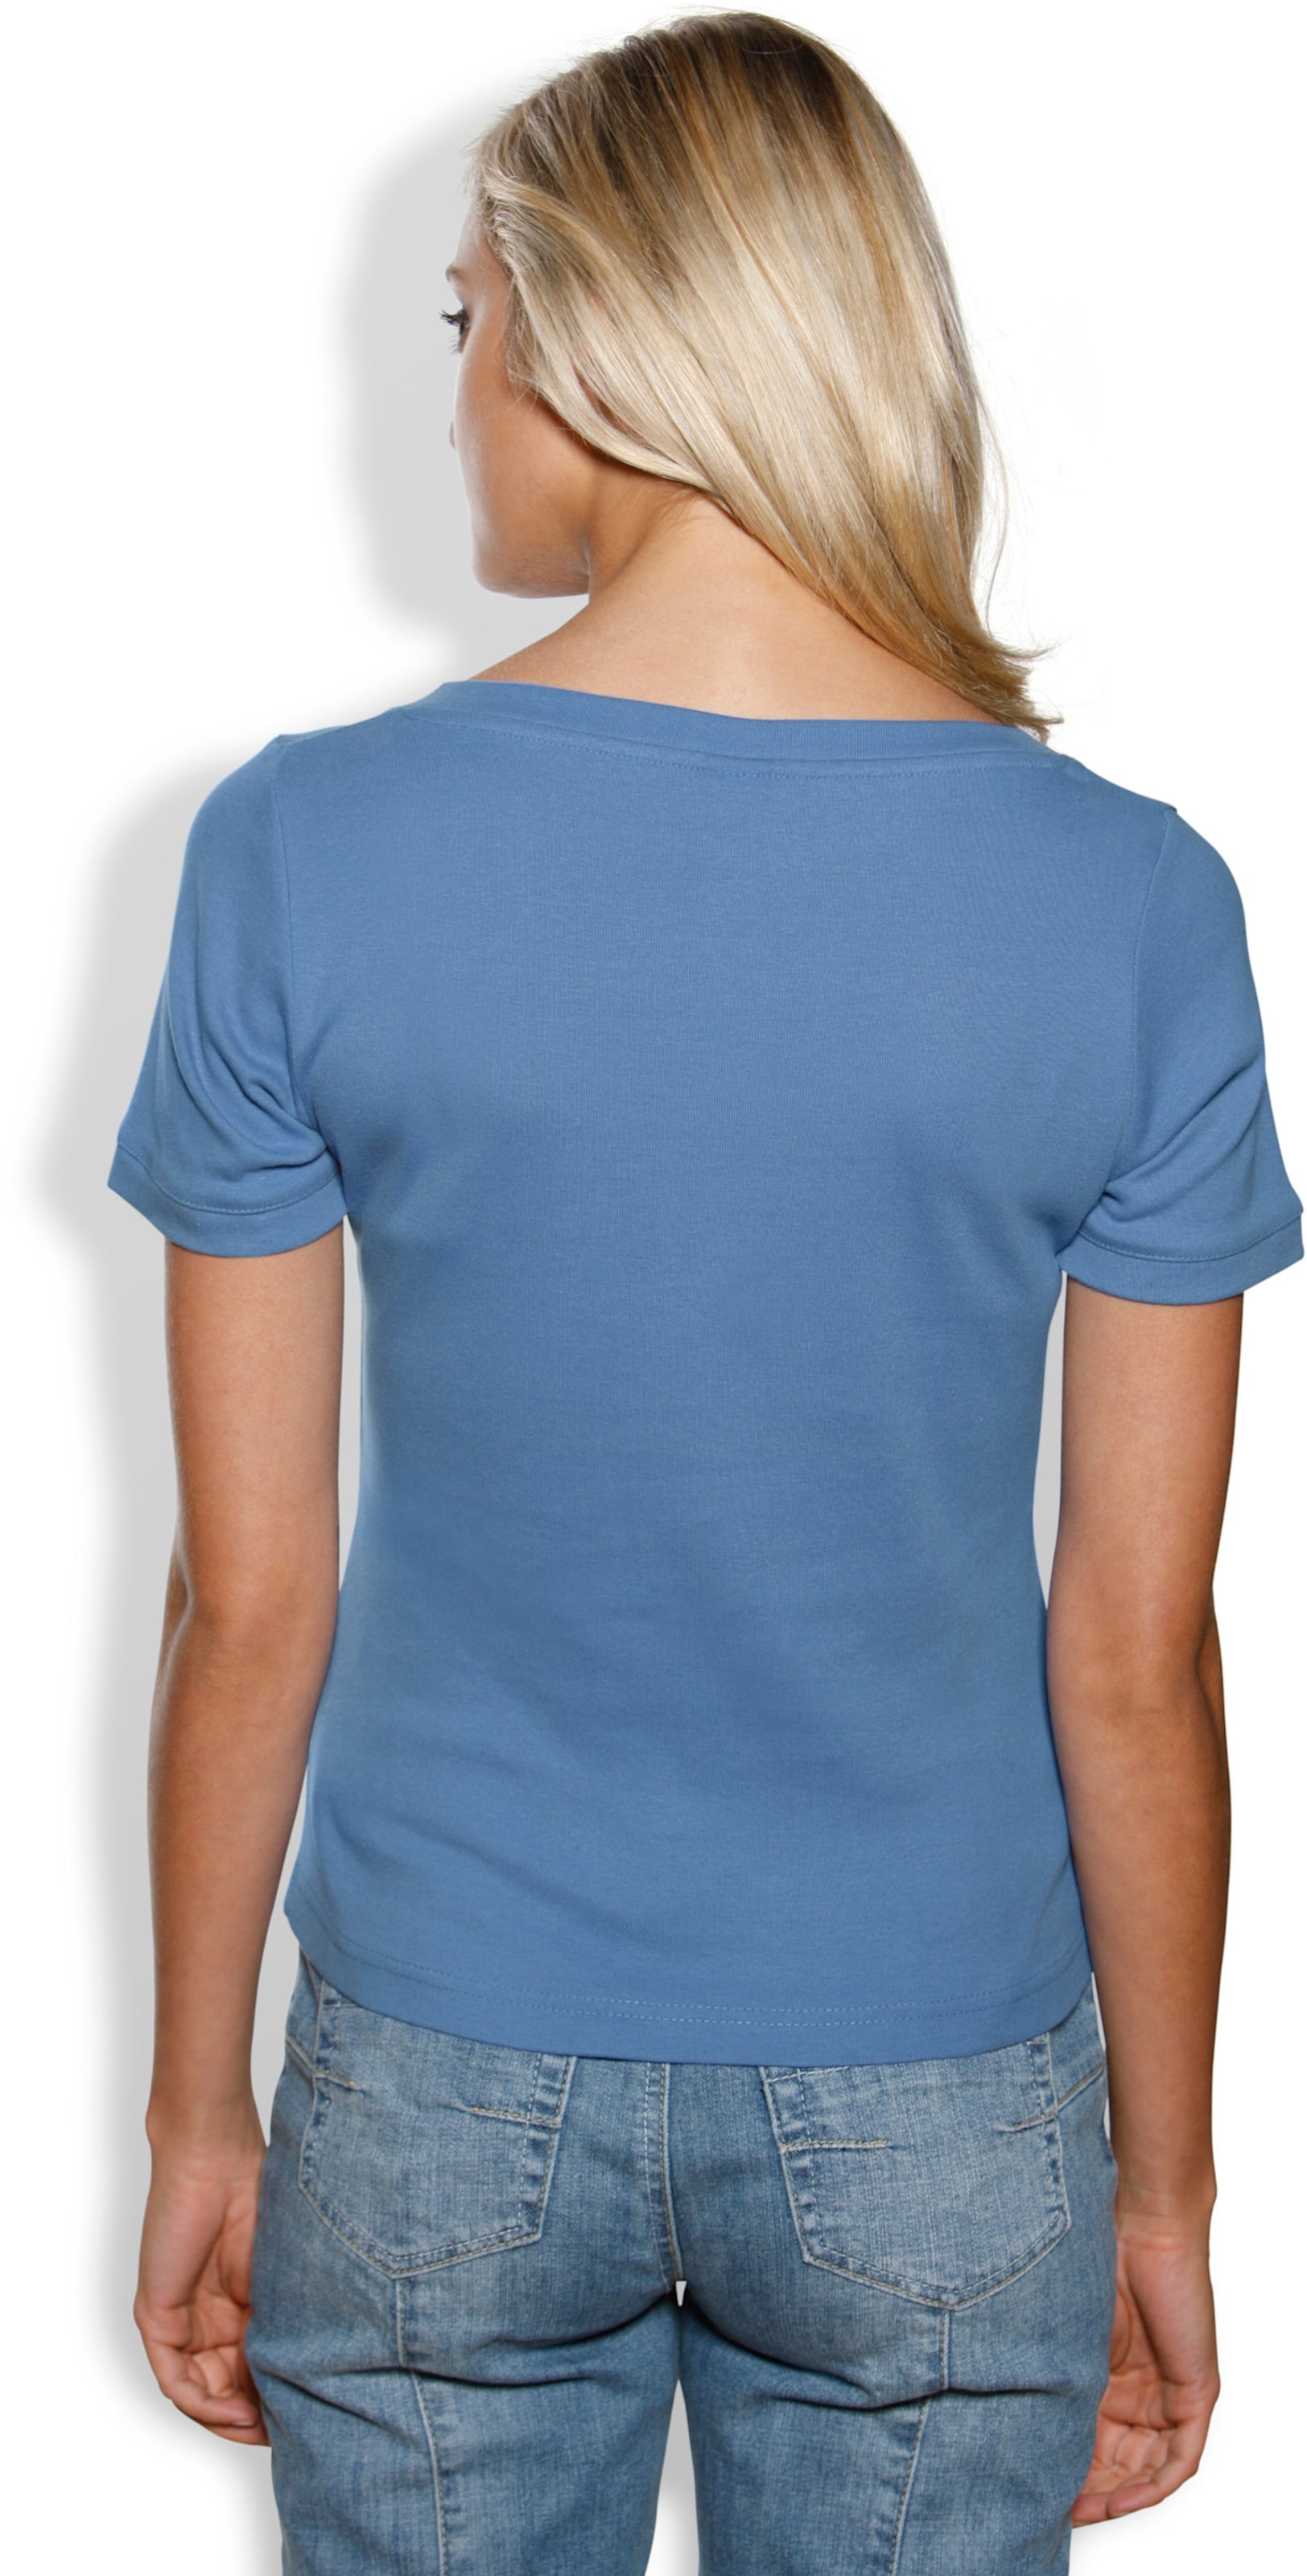 CARR günstig Kaufen-Carré-Shirt in azurblau von heine. Carré-Shirt in azurblau von heine <![CDATA[Carré-Shirt Mit großzügigem Ausschnitt. Aus trageangenehmer, feiner Rippenware. Figurbetonte Form.]]>. 